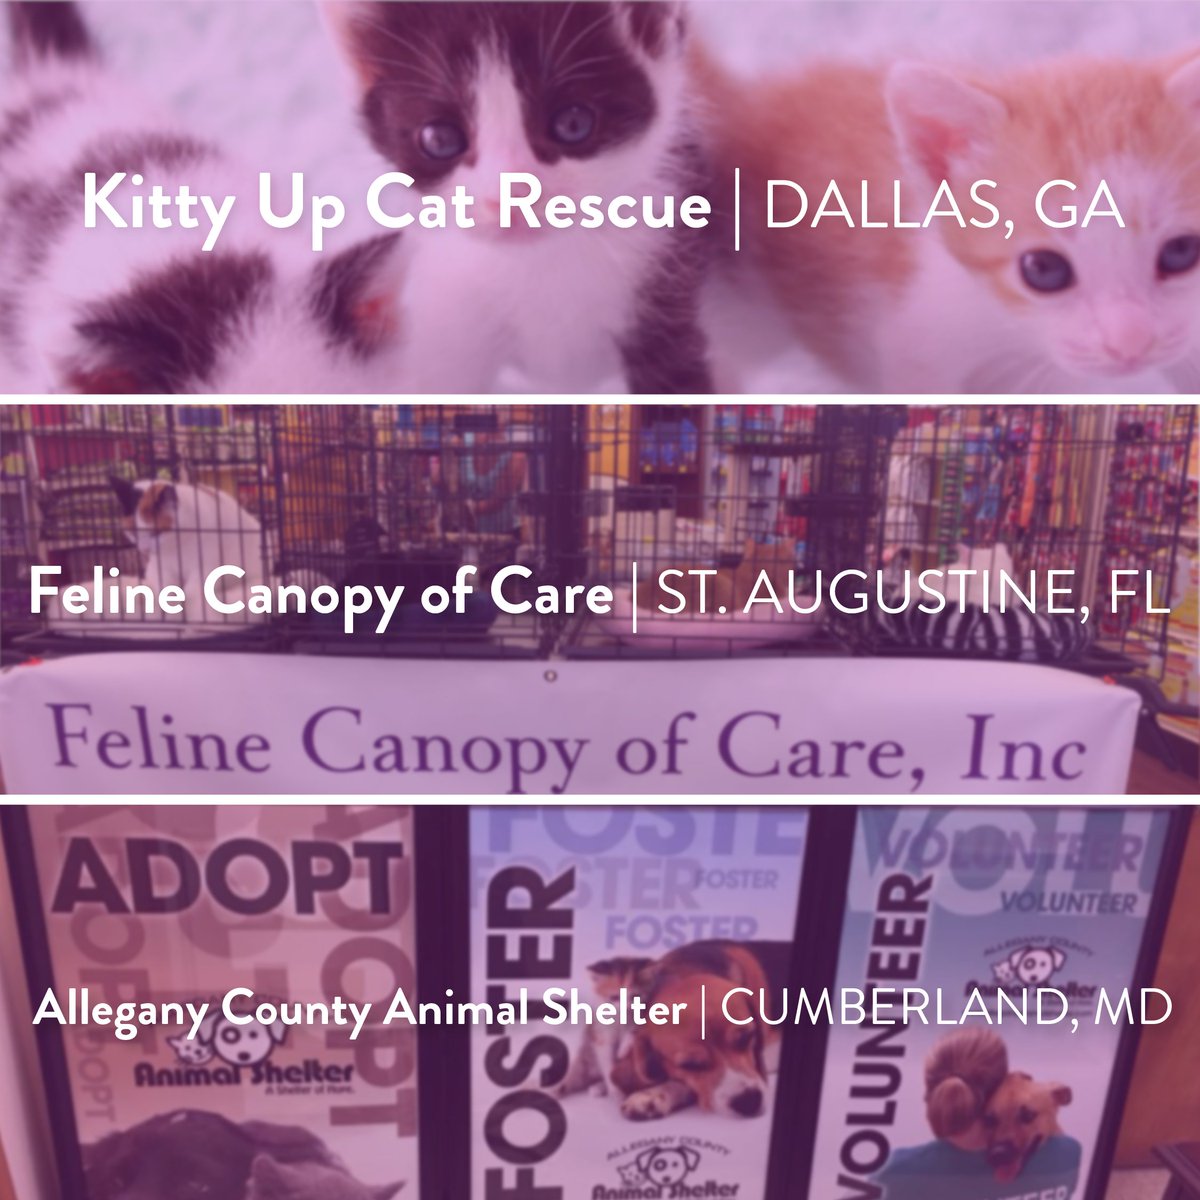 It's #PetAppreciationMonth! Check out all 3 shelter spotlight blogs! 🌟

Kitty Up Cat Rescue Shelter Spotlight: hubs.li/Q01ddQjc0
Feline Canopy of Care, Inc. Shelter Spotlight: hubs.li/Q01ddZ4P0
Allegany County Animal Shelter Shelter Spotlight: hubs.li/Q01ddS-m0